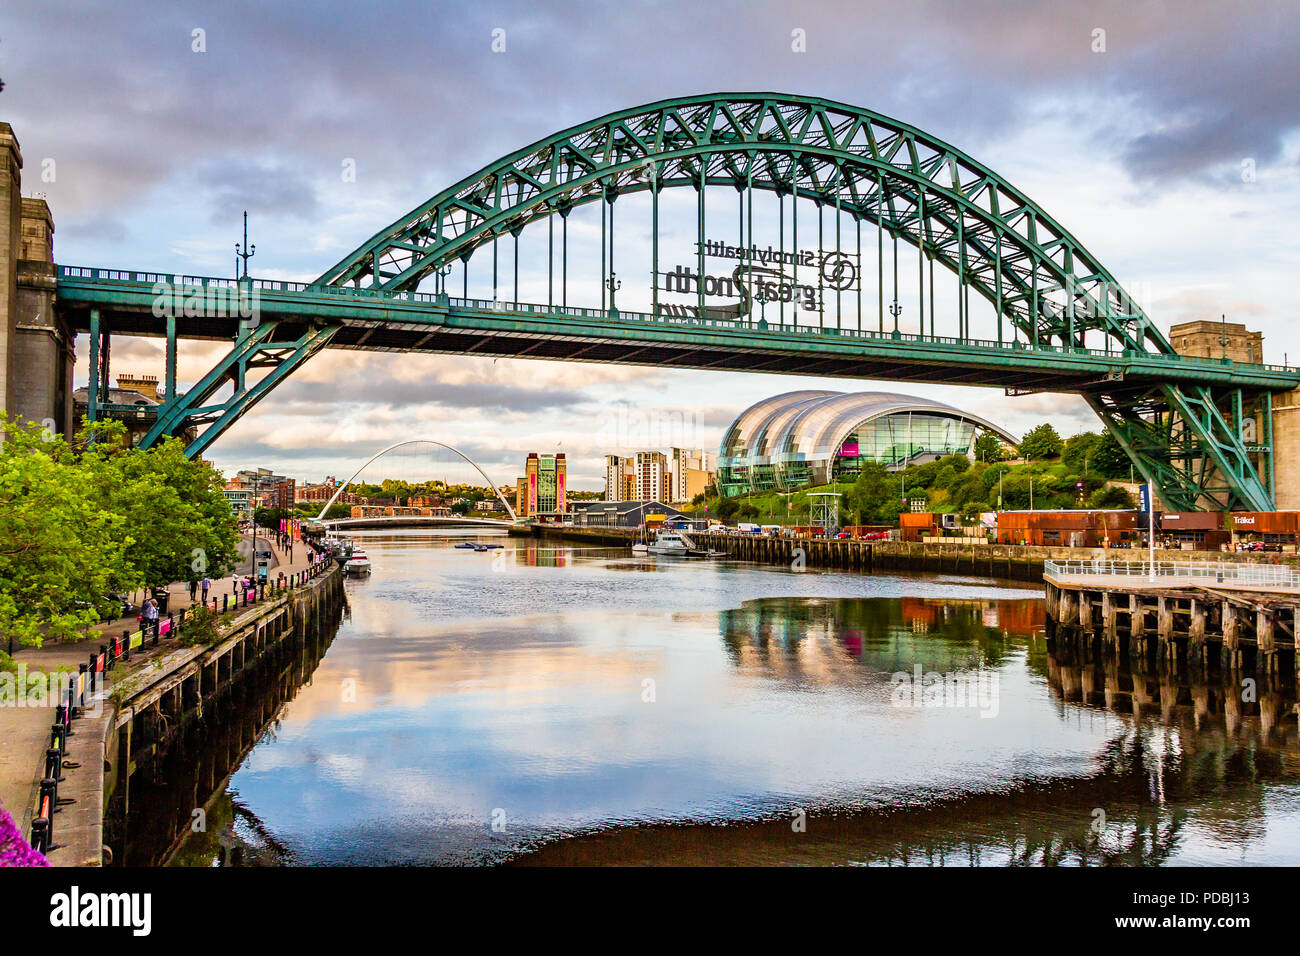 The Tyne riverside with the Tyne Bridge, Millennium Bridge, Sage and Baltic Art Gallery at sunset, Newcastle-upon-Tyne and Gateshead, UK. Stock Photo